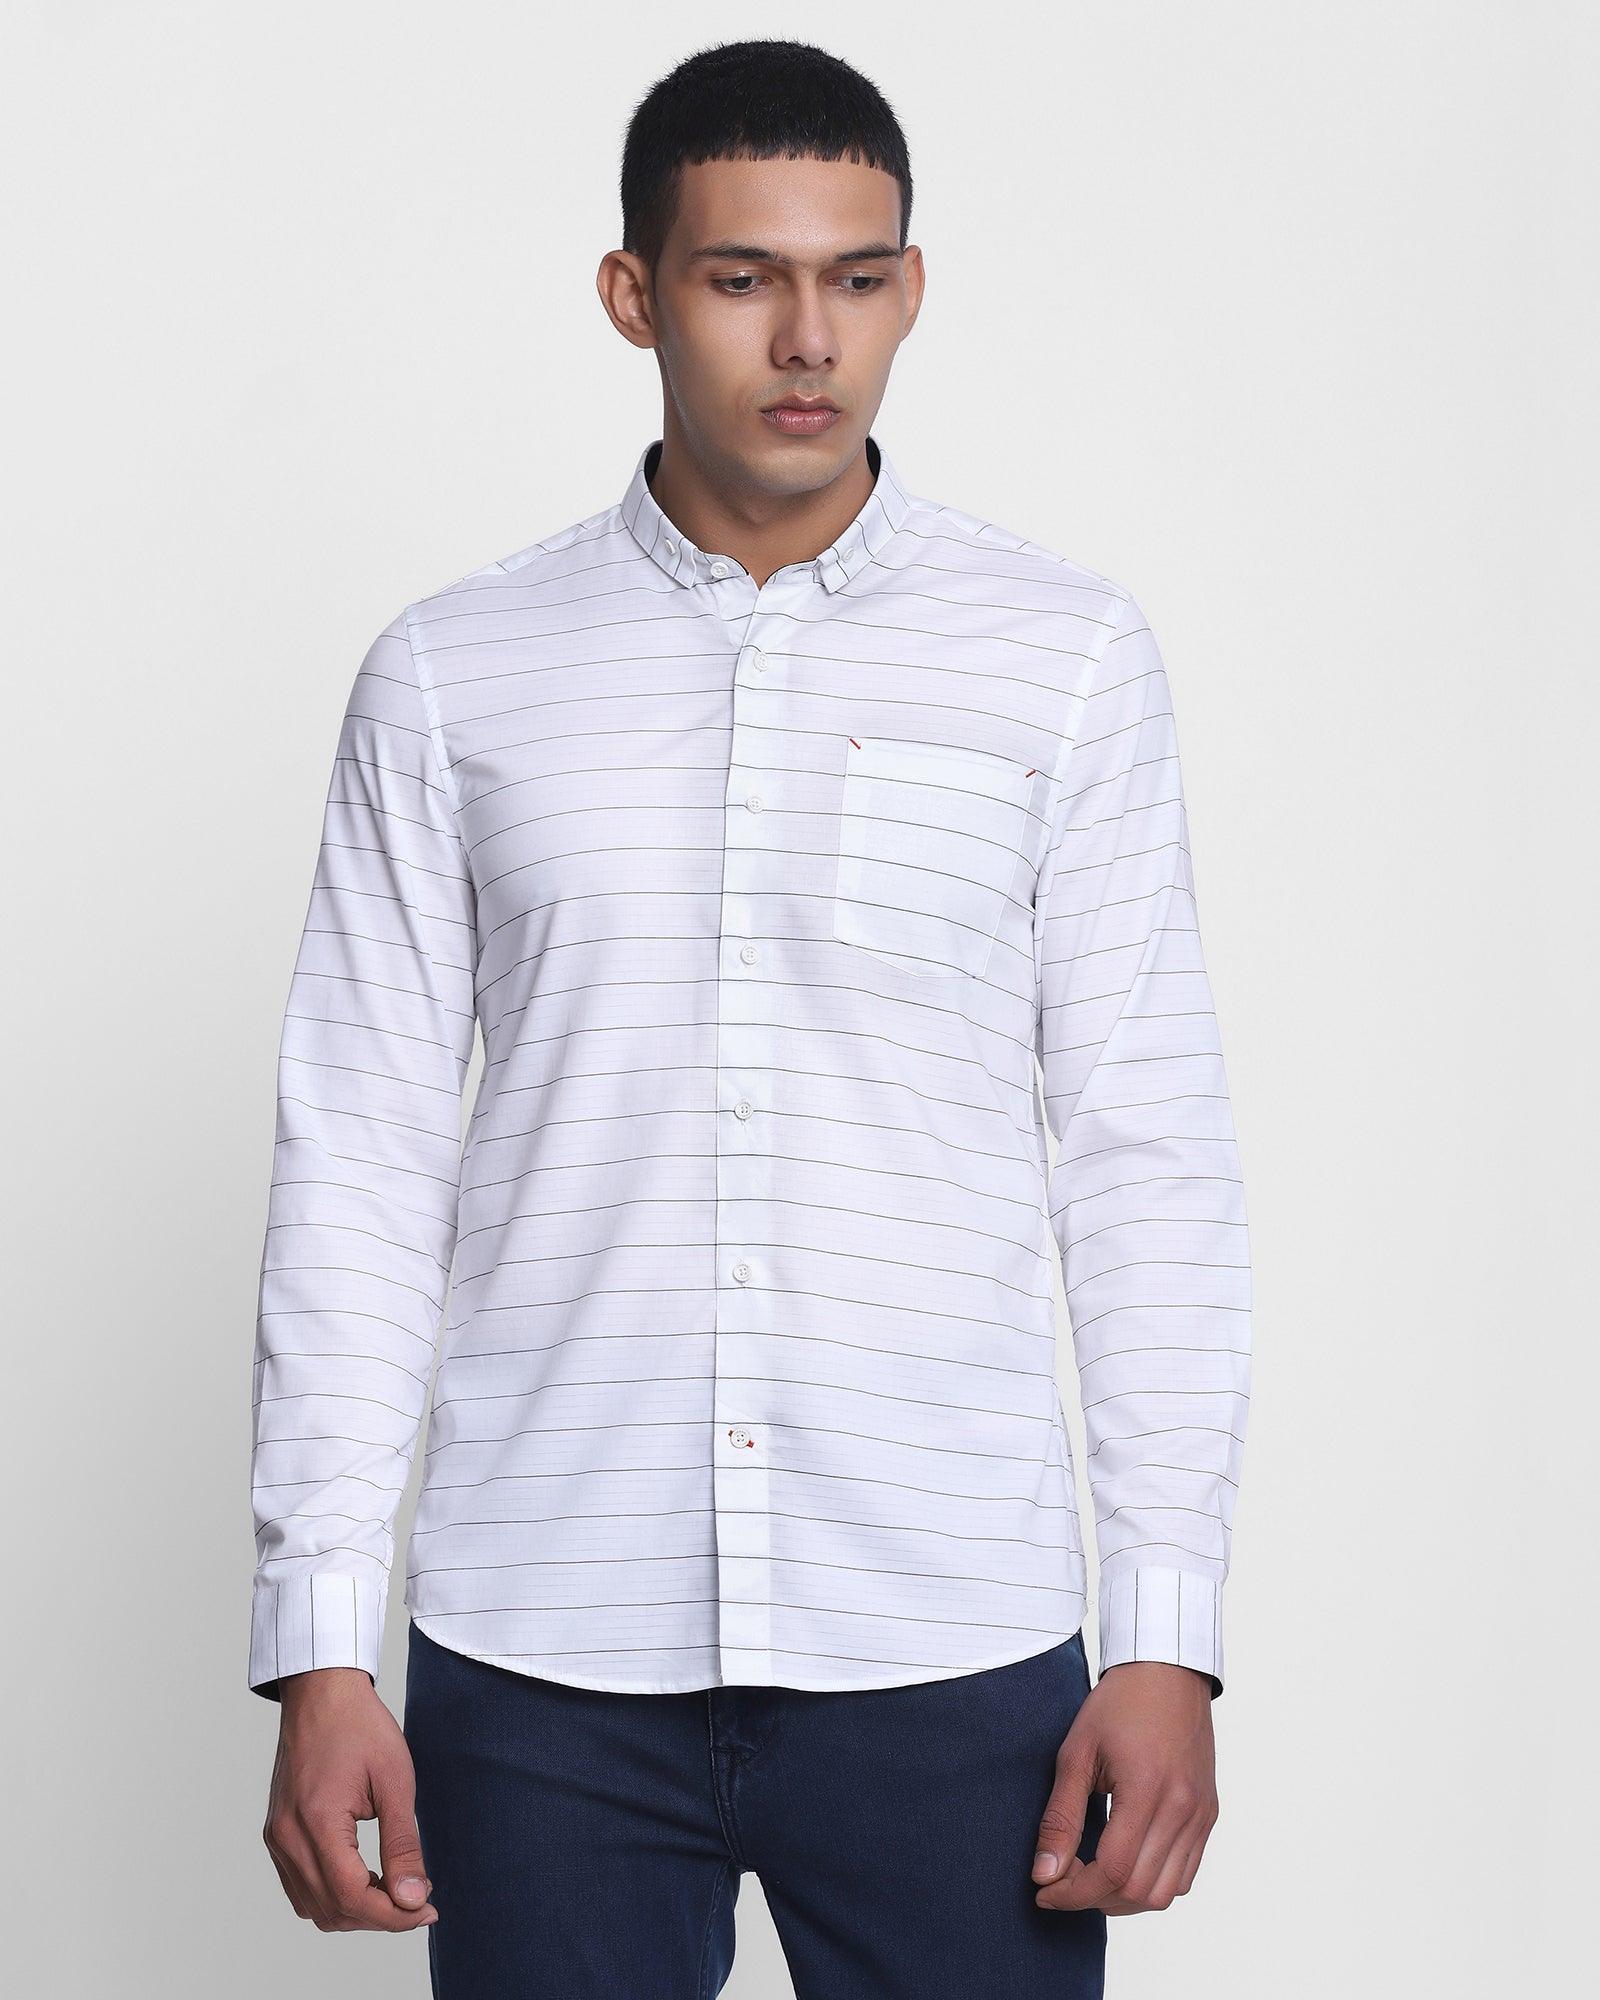 Casual White Striped Shirt - Patrick